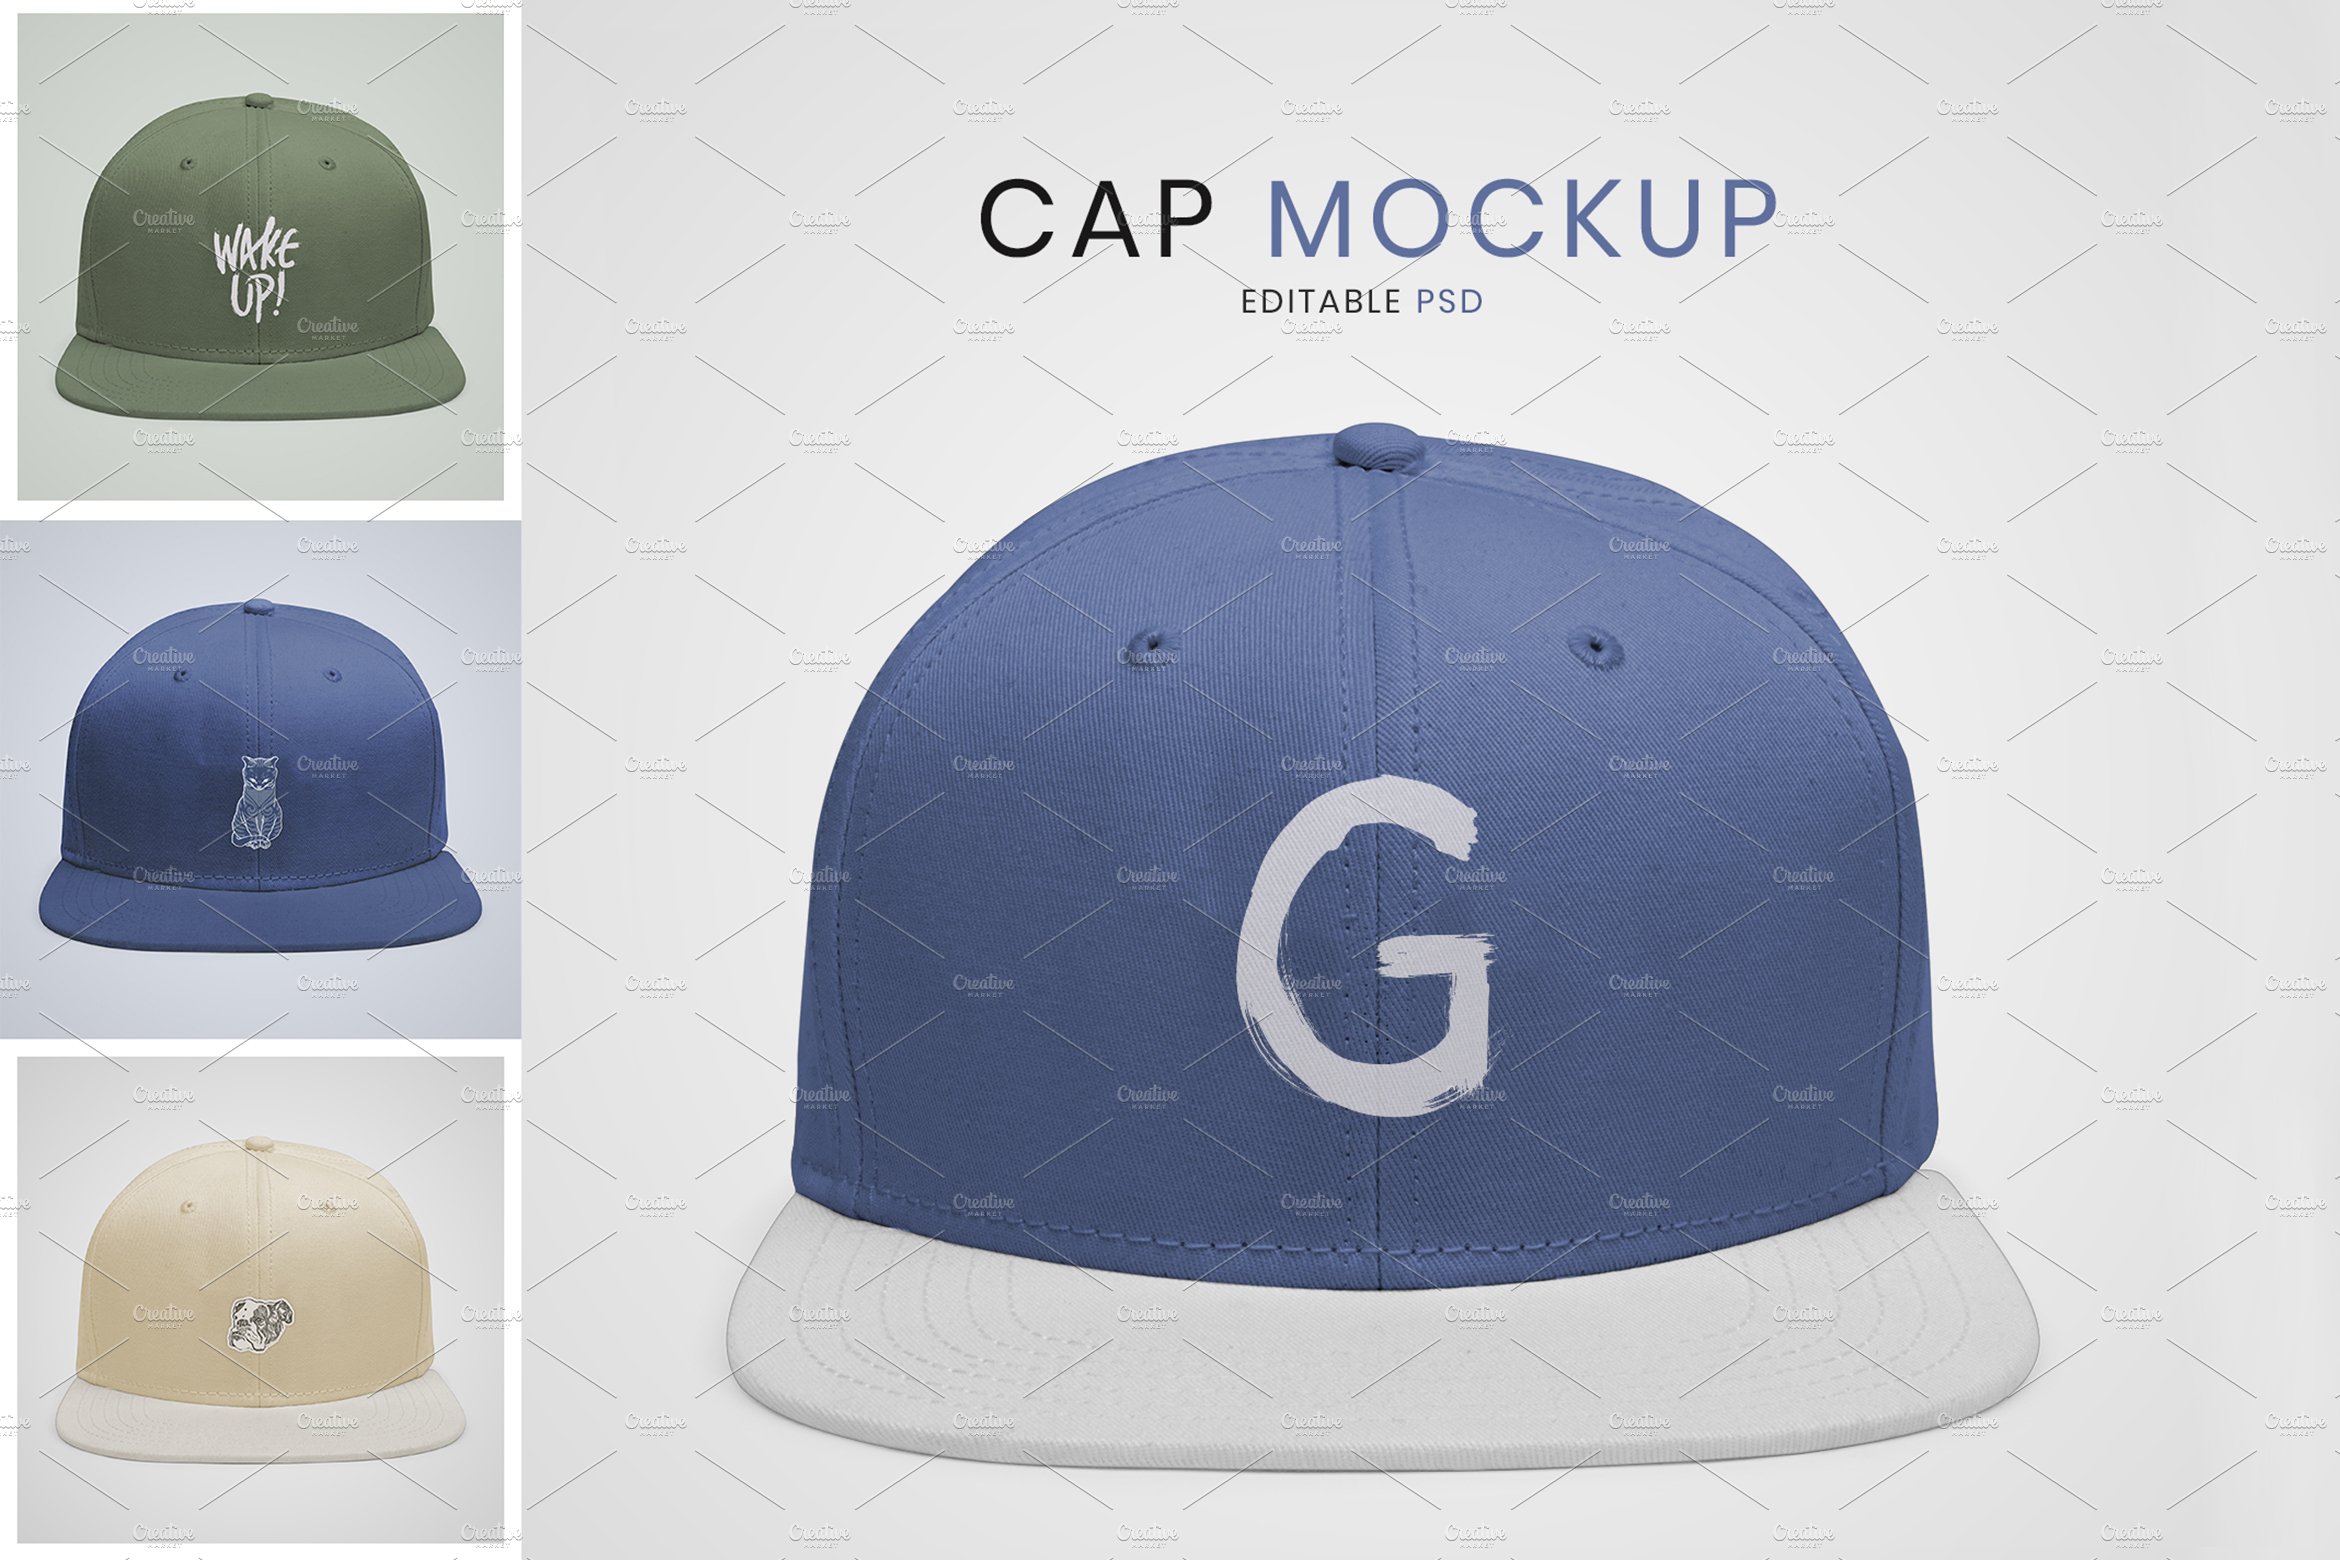 Cap mockup psd headwear accessory cover image.